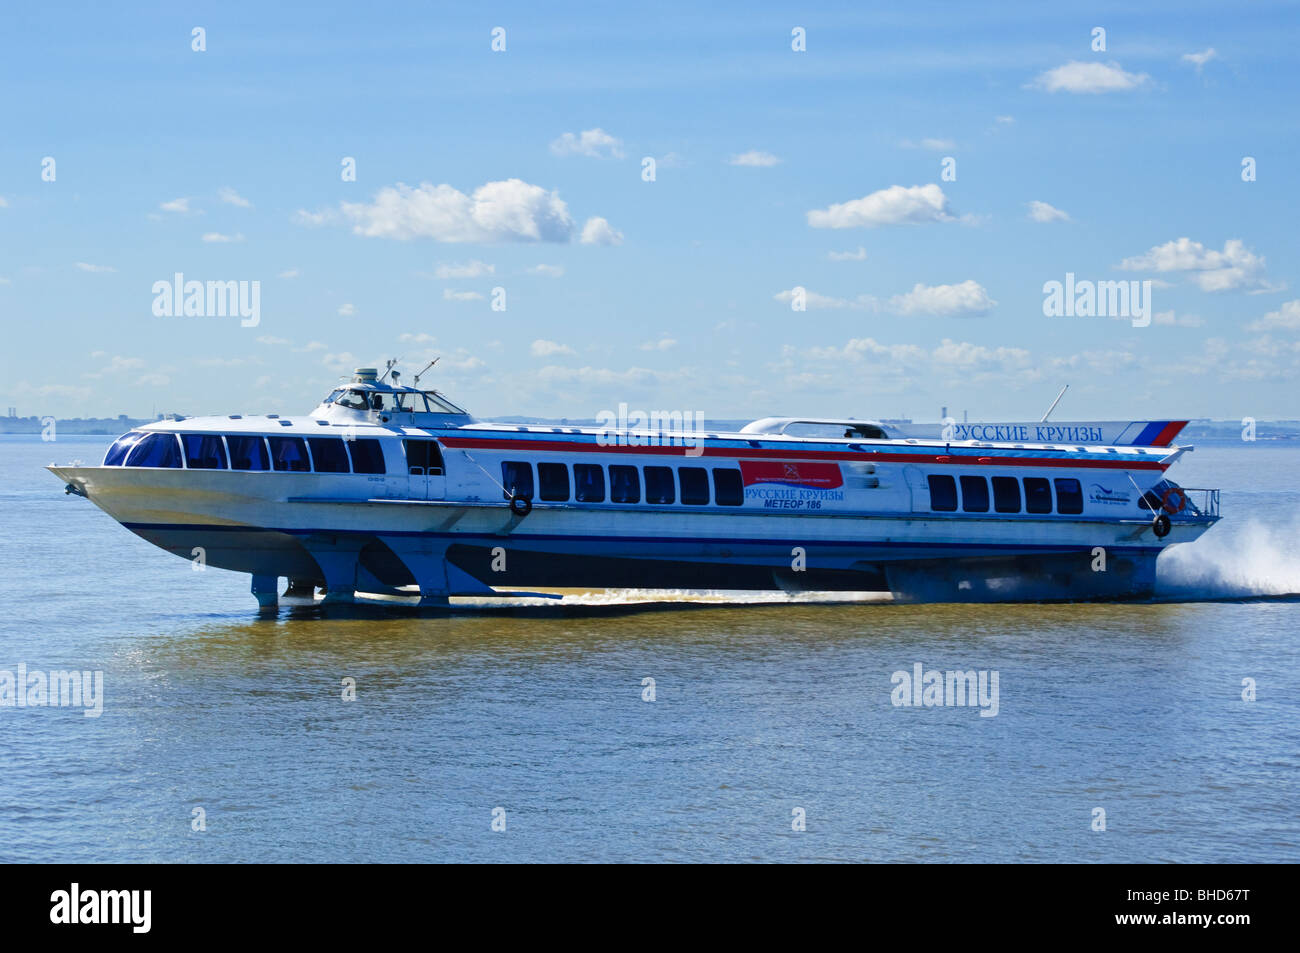 Hydrofoil on the River Neva, St Petersburg, Russia Stock Photo